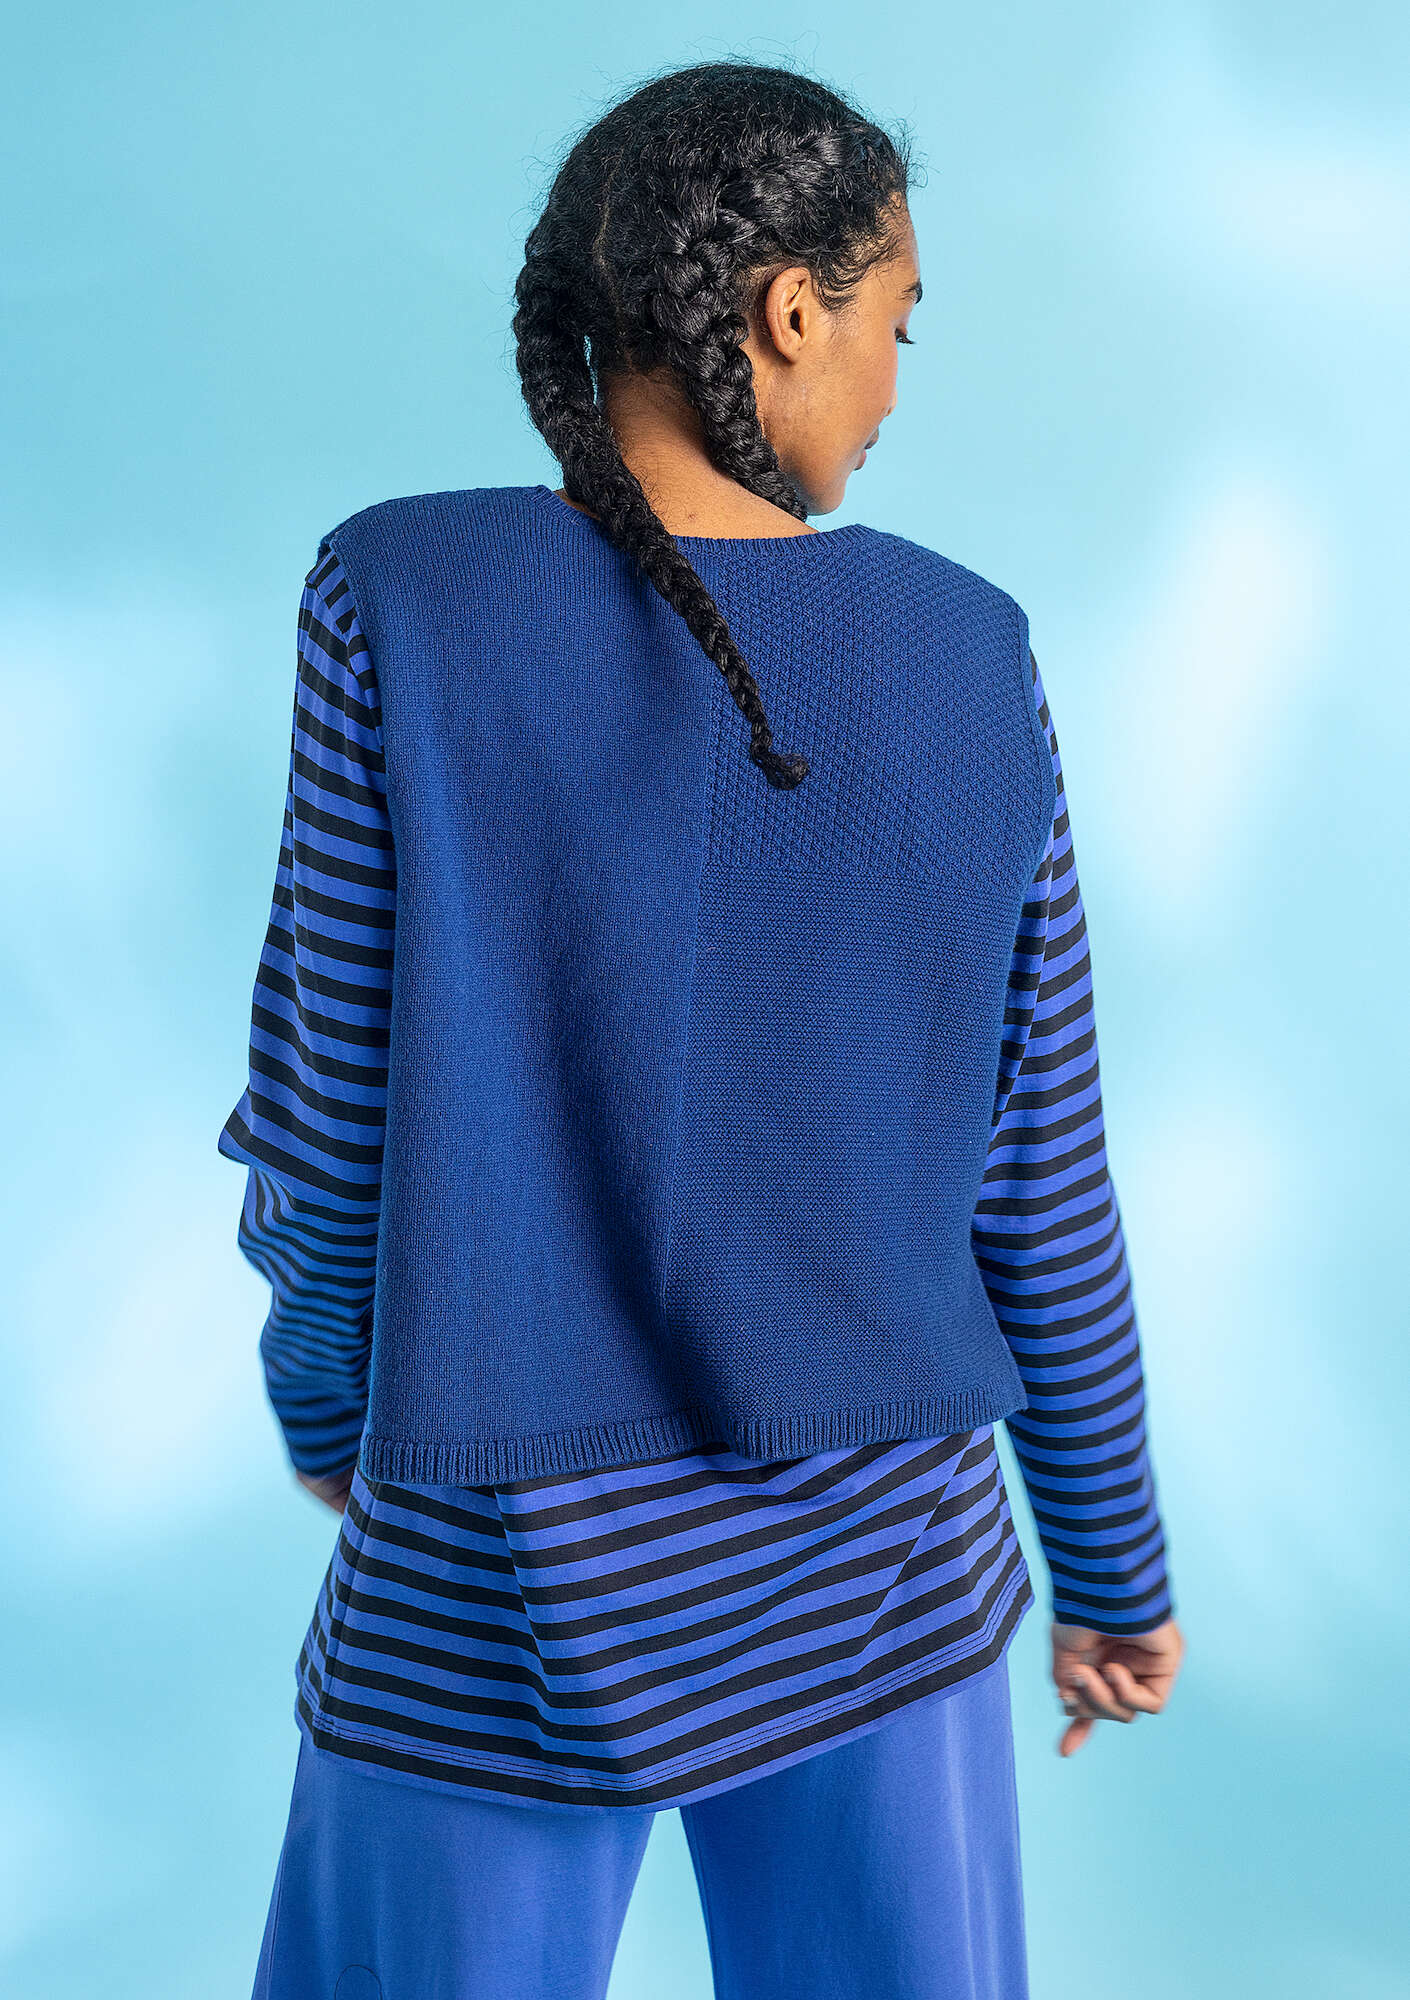 Wool/cotton knit waistcoat indigo blue